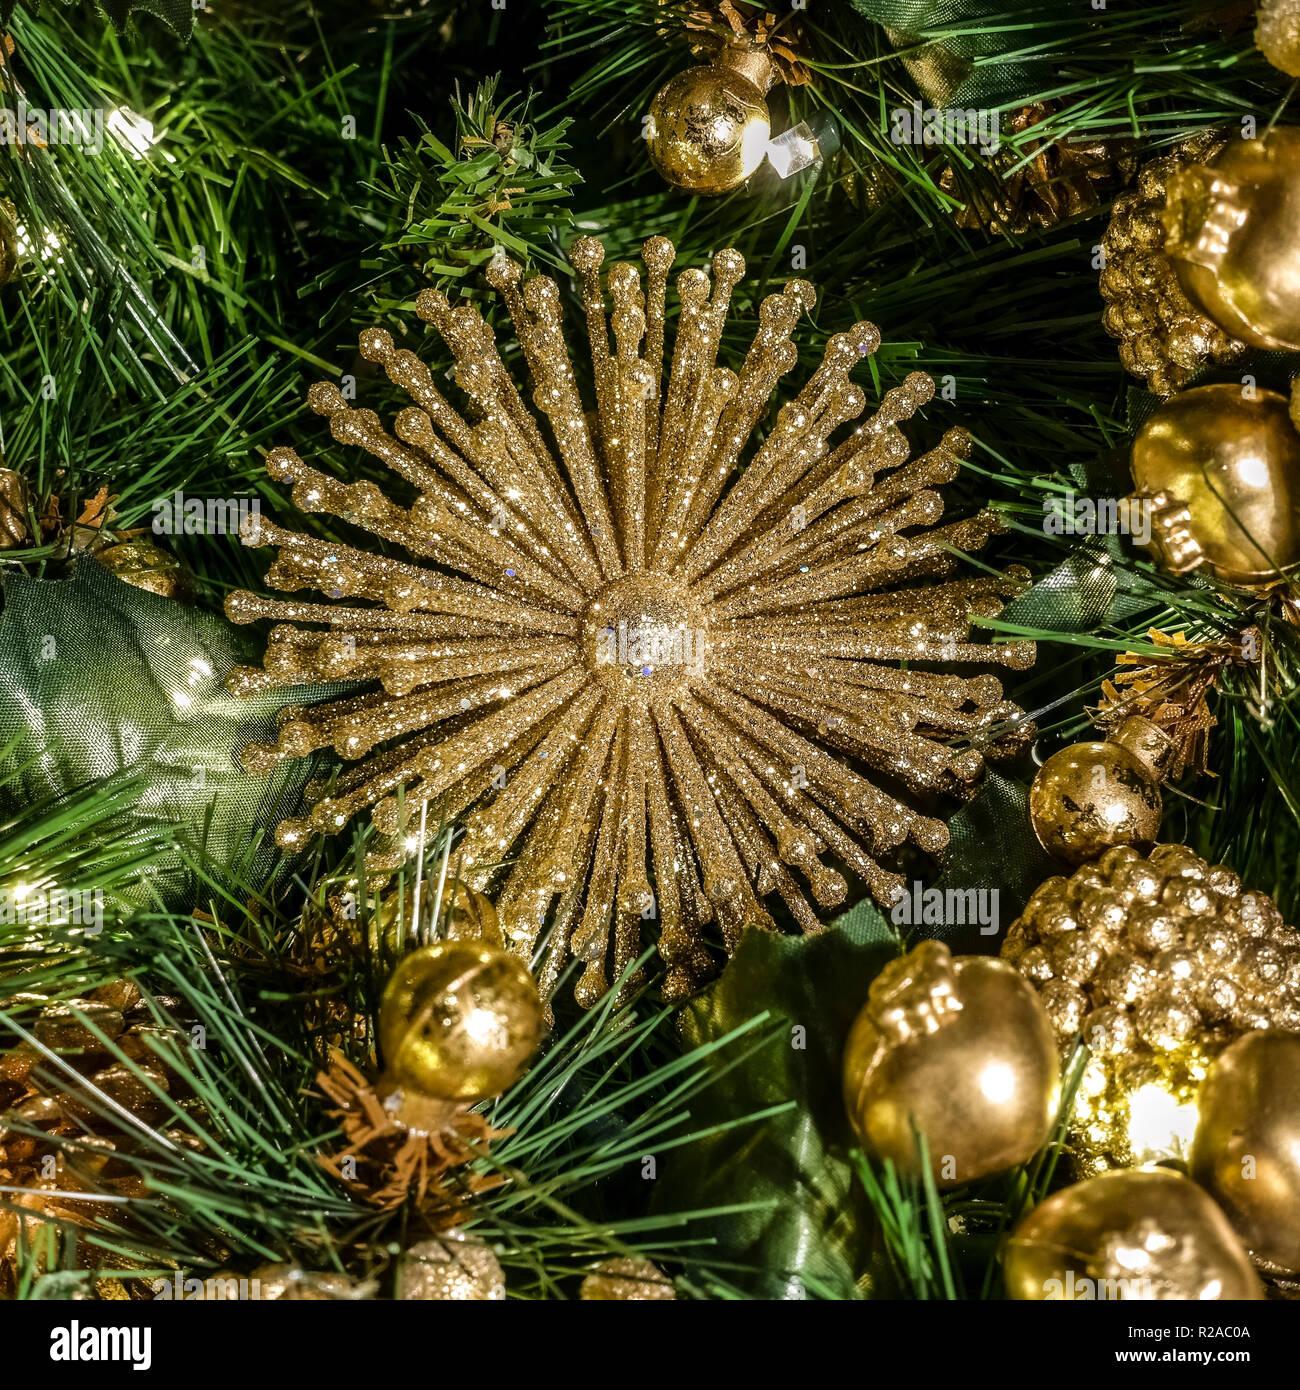 Golden christmas tree decorations. Christmas time festive mood atmosphere. Seasonal image. Stock Photo